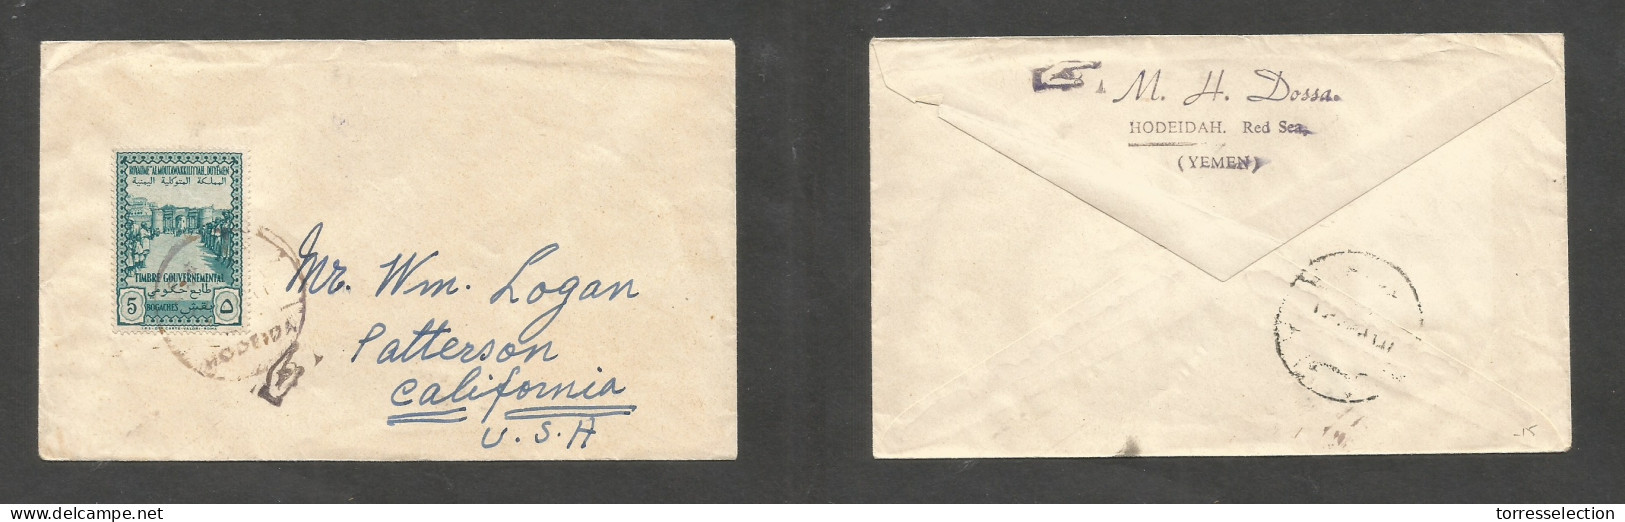 YEMEN. C. 1950s. Hodeida - USA, CA, Patterson. 5 Bogaches Single Unseald Fkd Envelope, Violet Cachet + Transit Reverse.  - Jemen